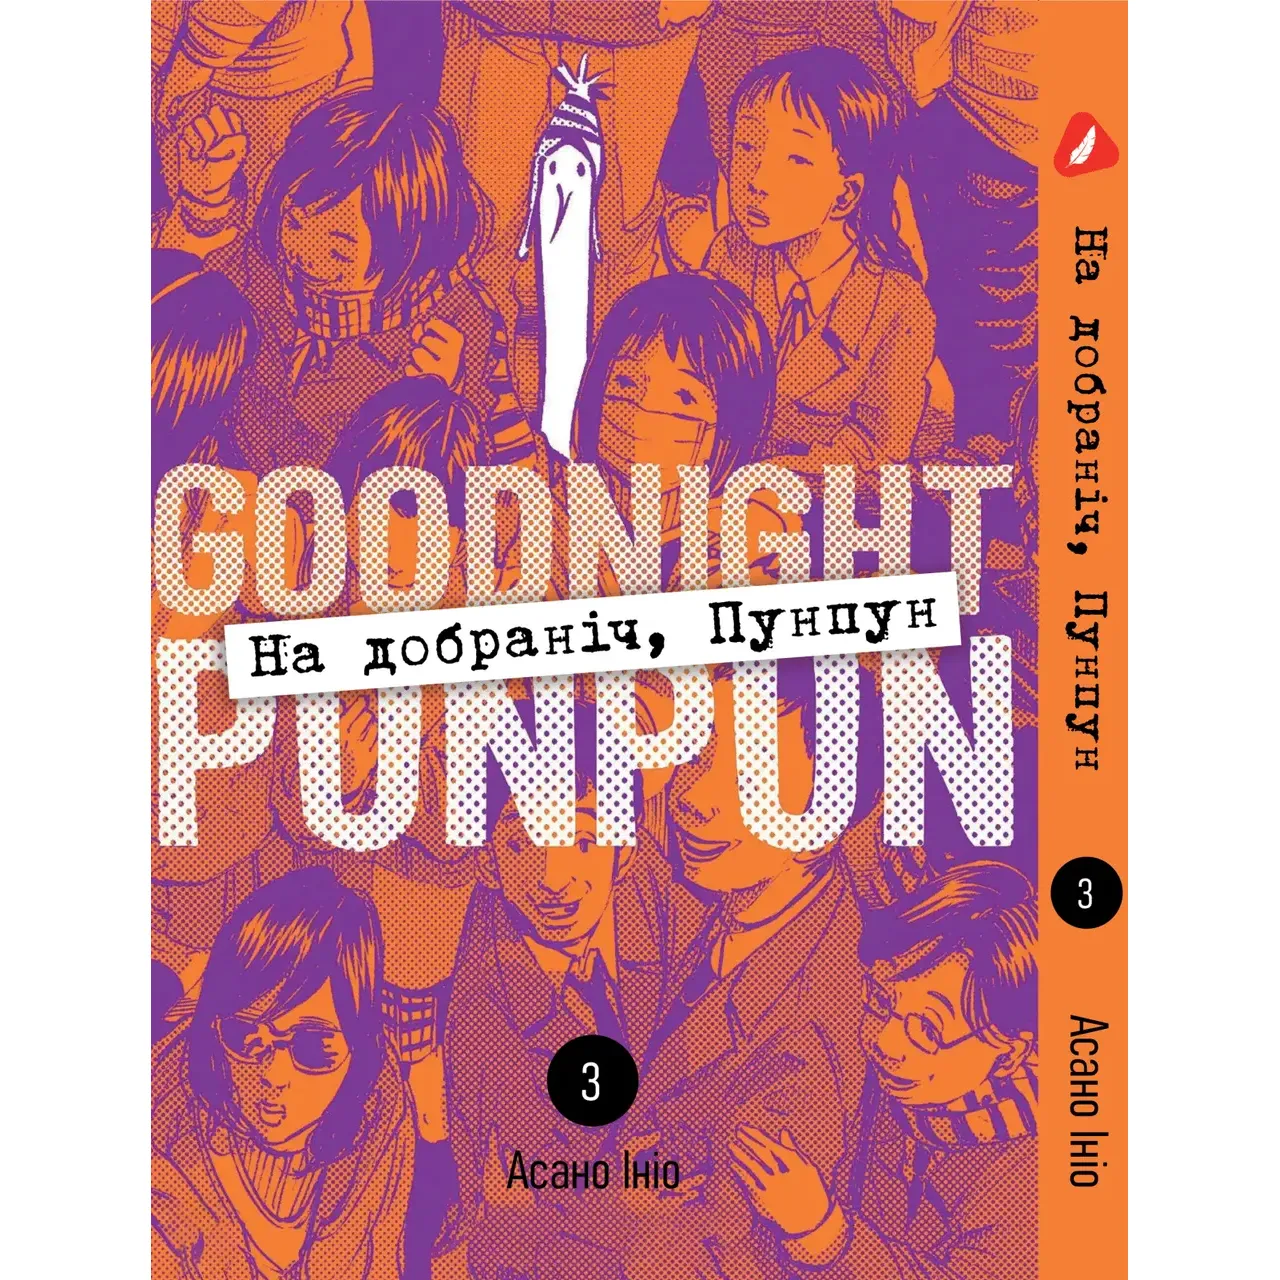 Комплект манги Yohoho Print Goodnight Punpun Спокойной ночи Пунпун Том с 1 - 5 YP GP K 01 - Асано Инио (1832373405.0) - фото 4